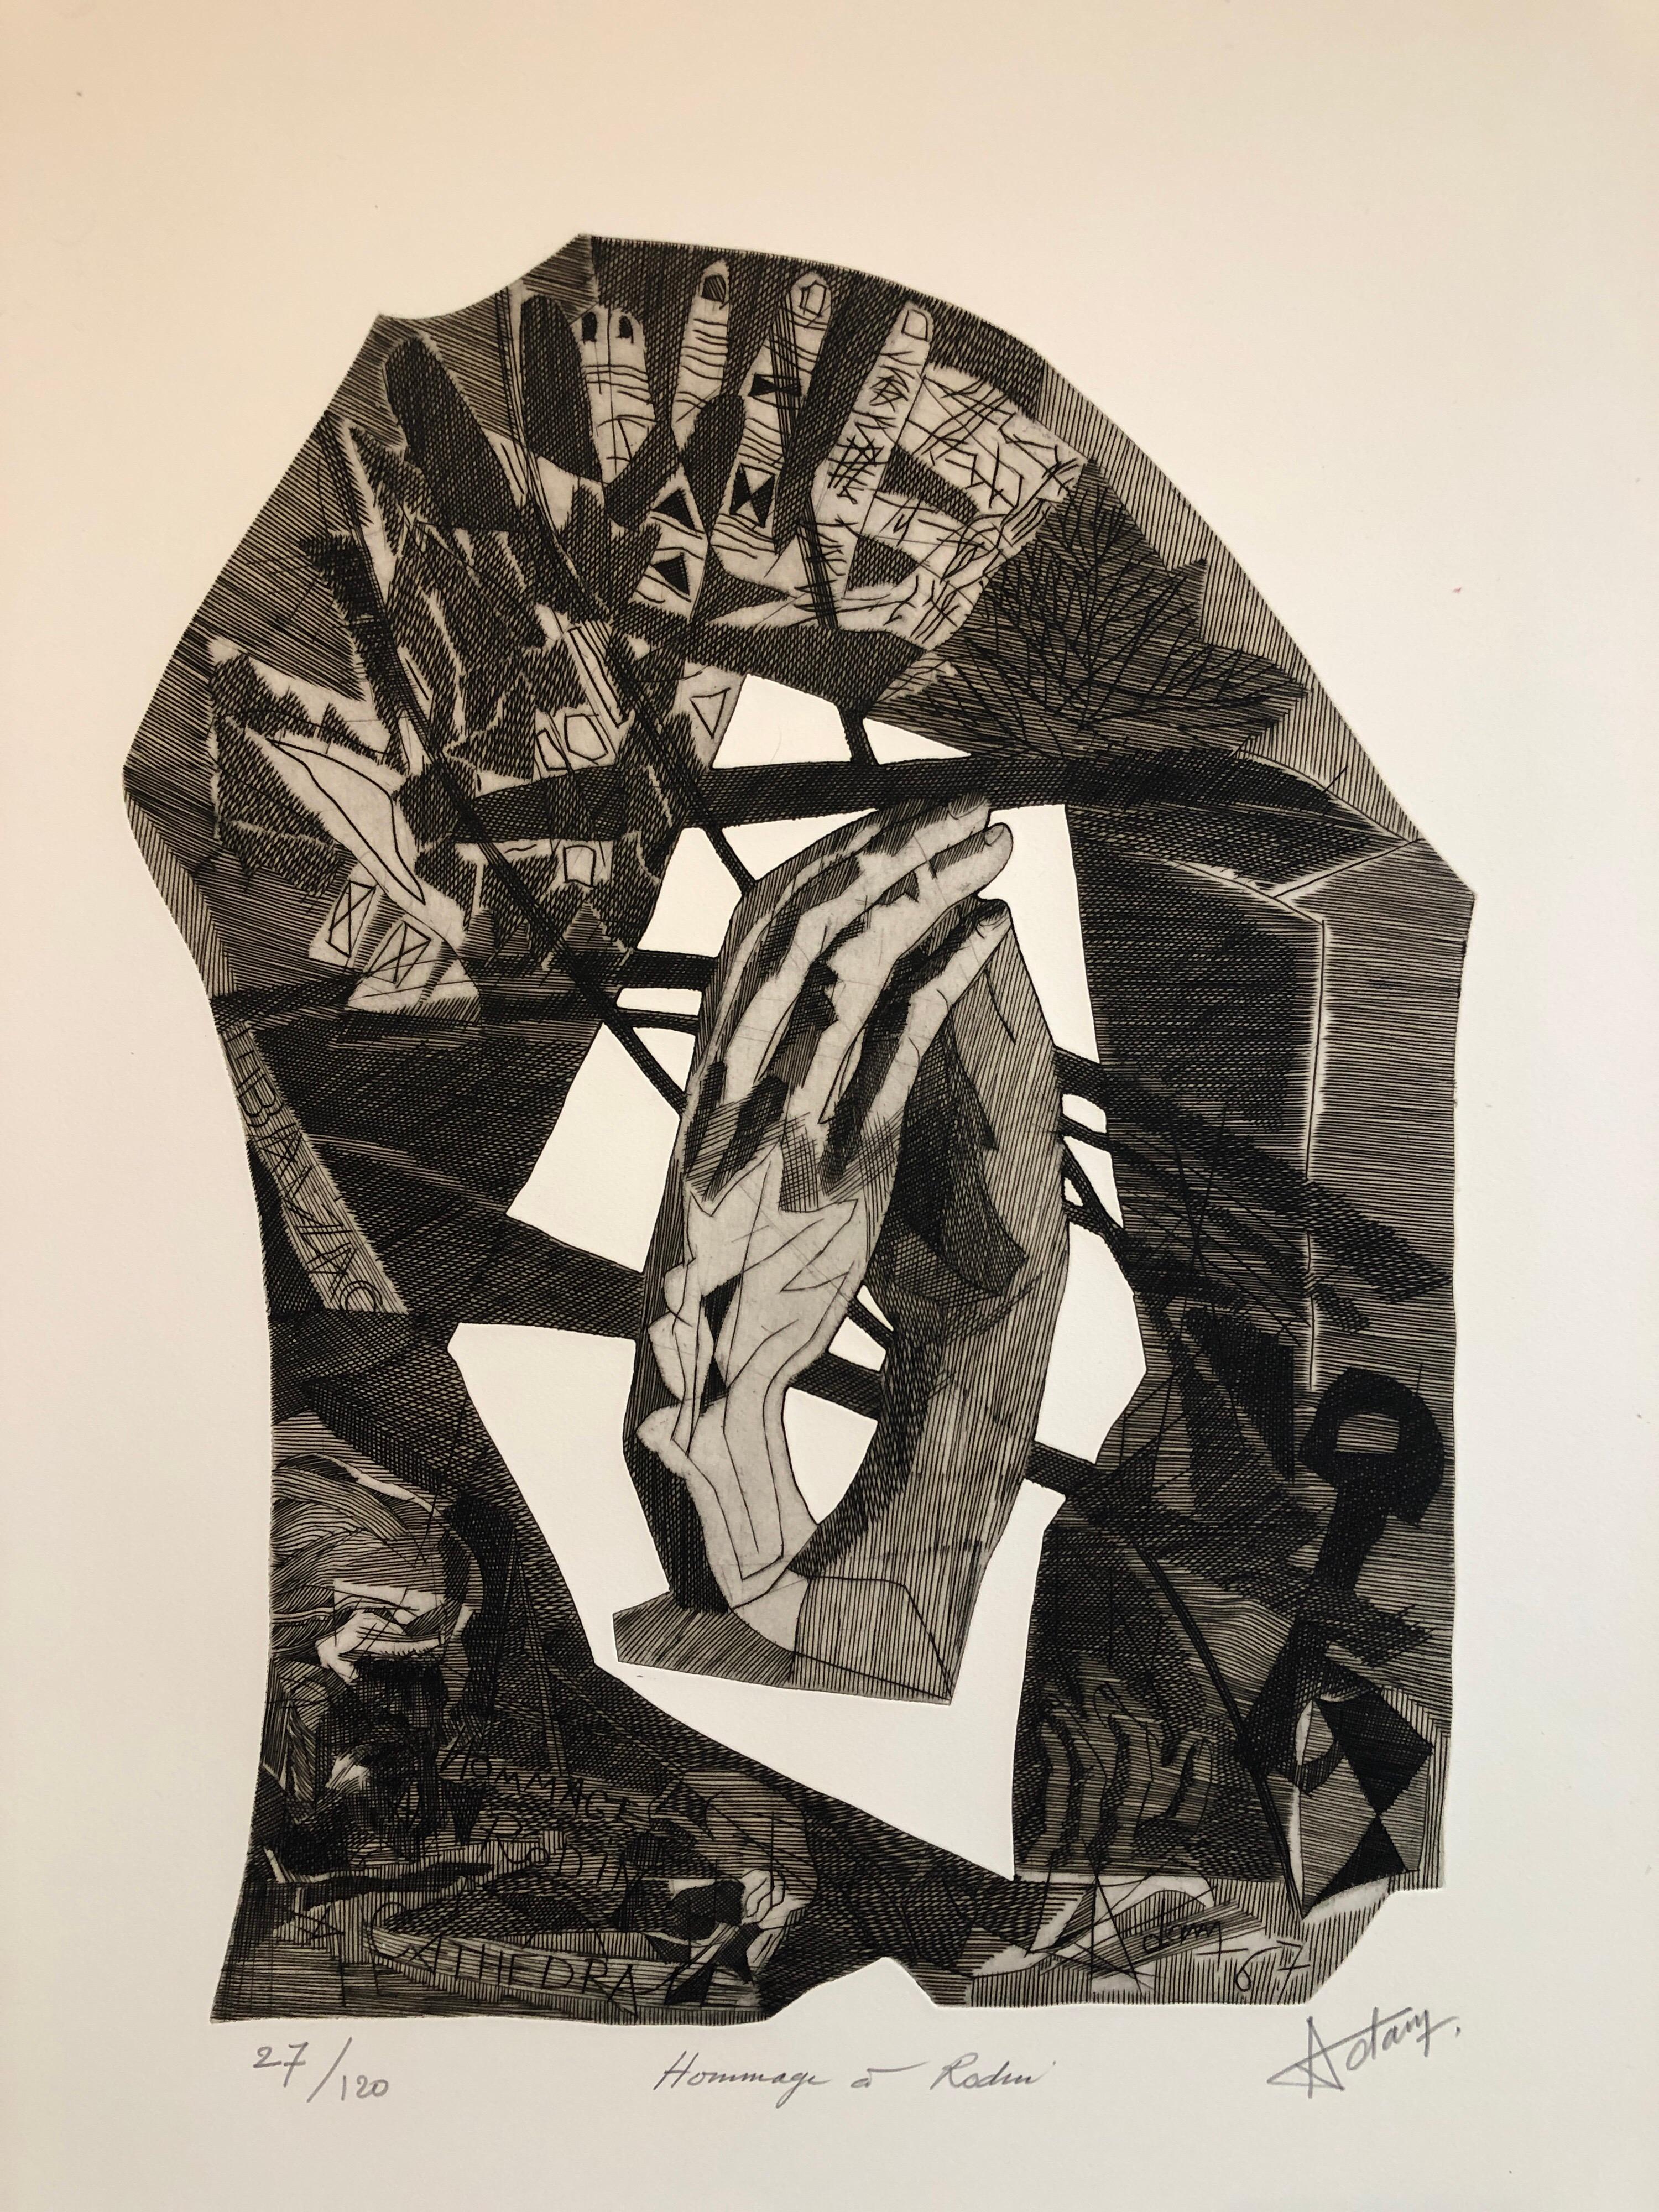 Henri Georges Adams Abstract Print - Surrealist Carborundum Etching, Homage a Rodin